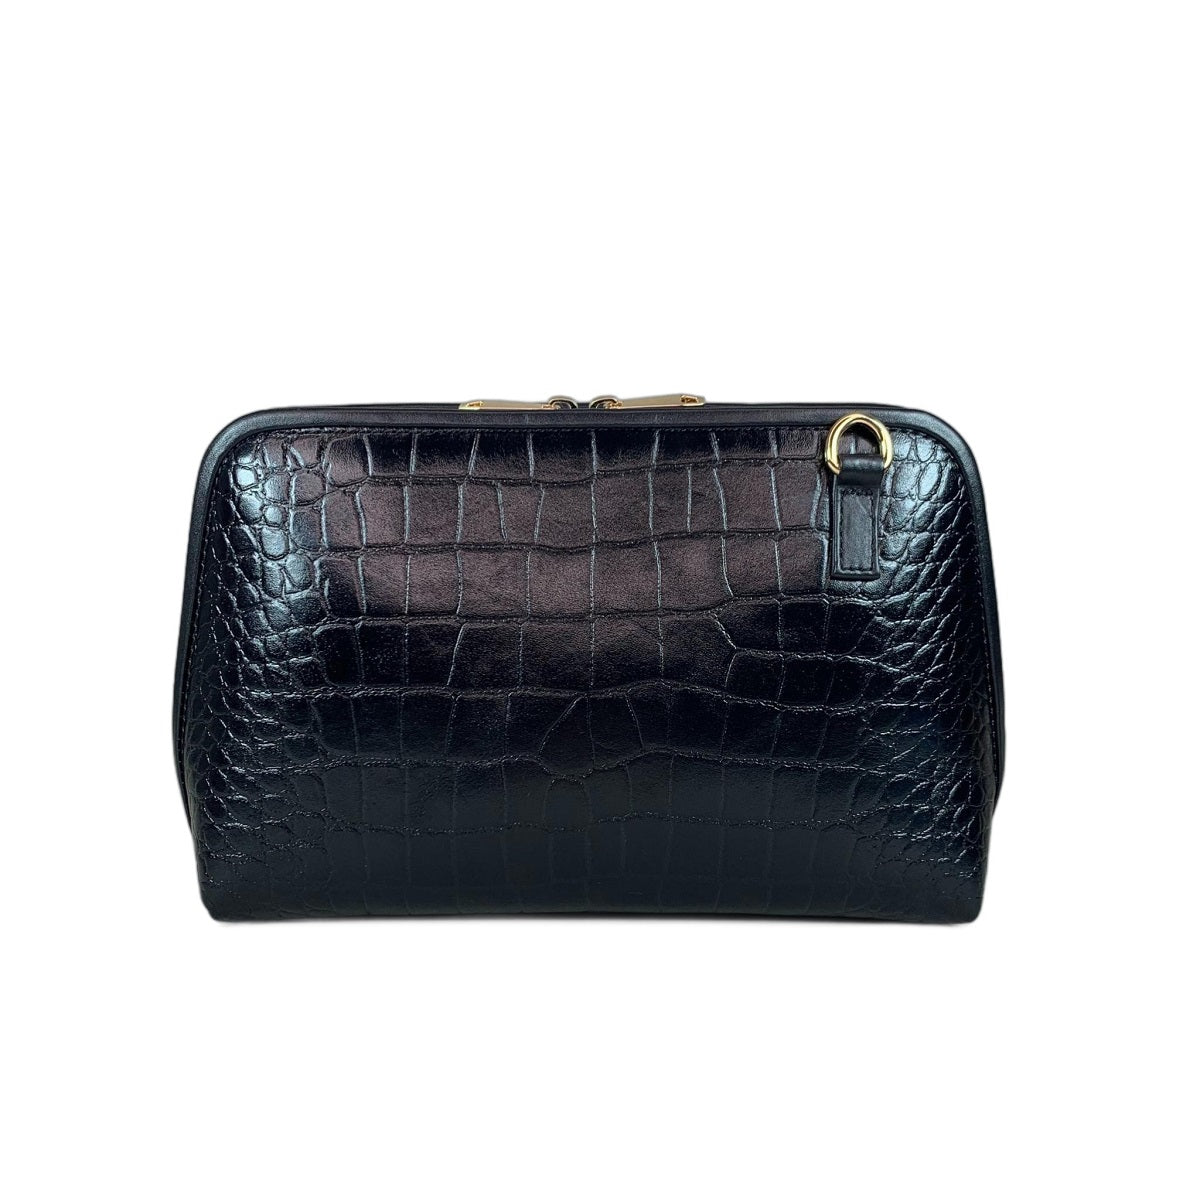 LeatherLuxe - Black Leather Clutch Bag Shoulder Bag; Crossbody, genuine leather clutch bag Handbag